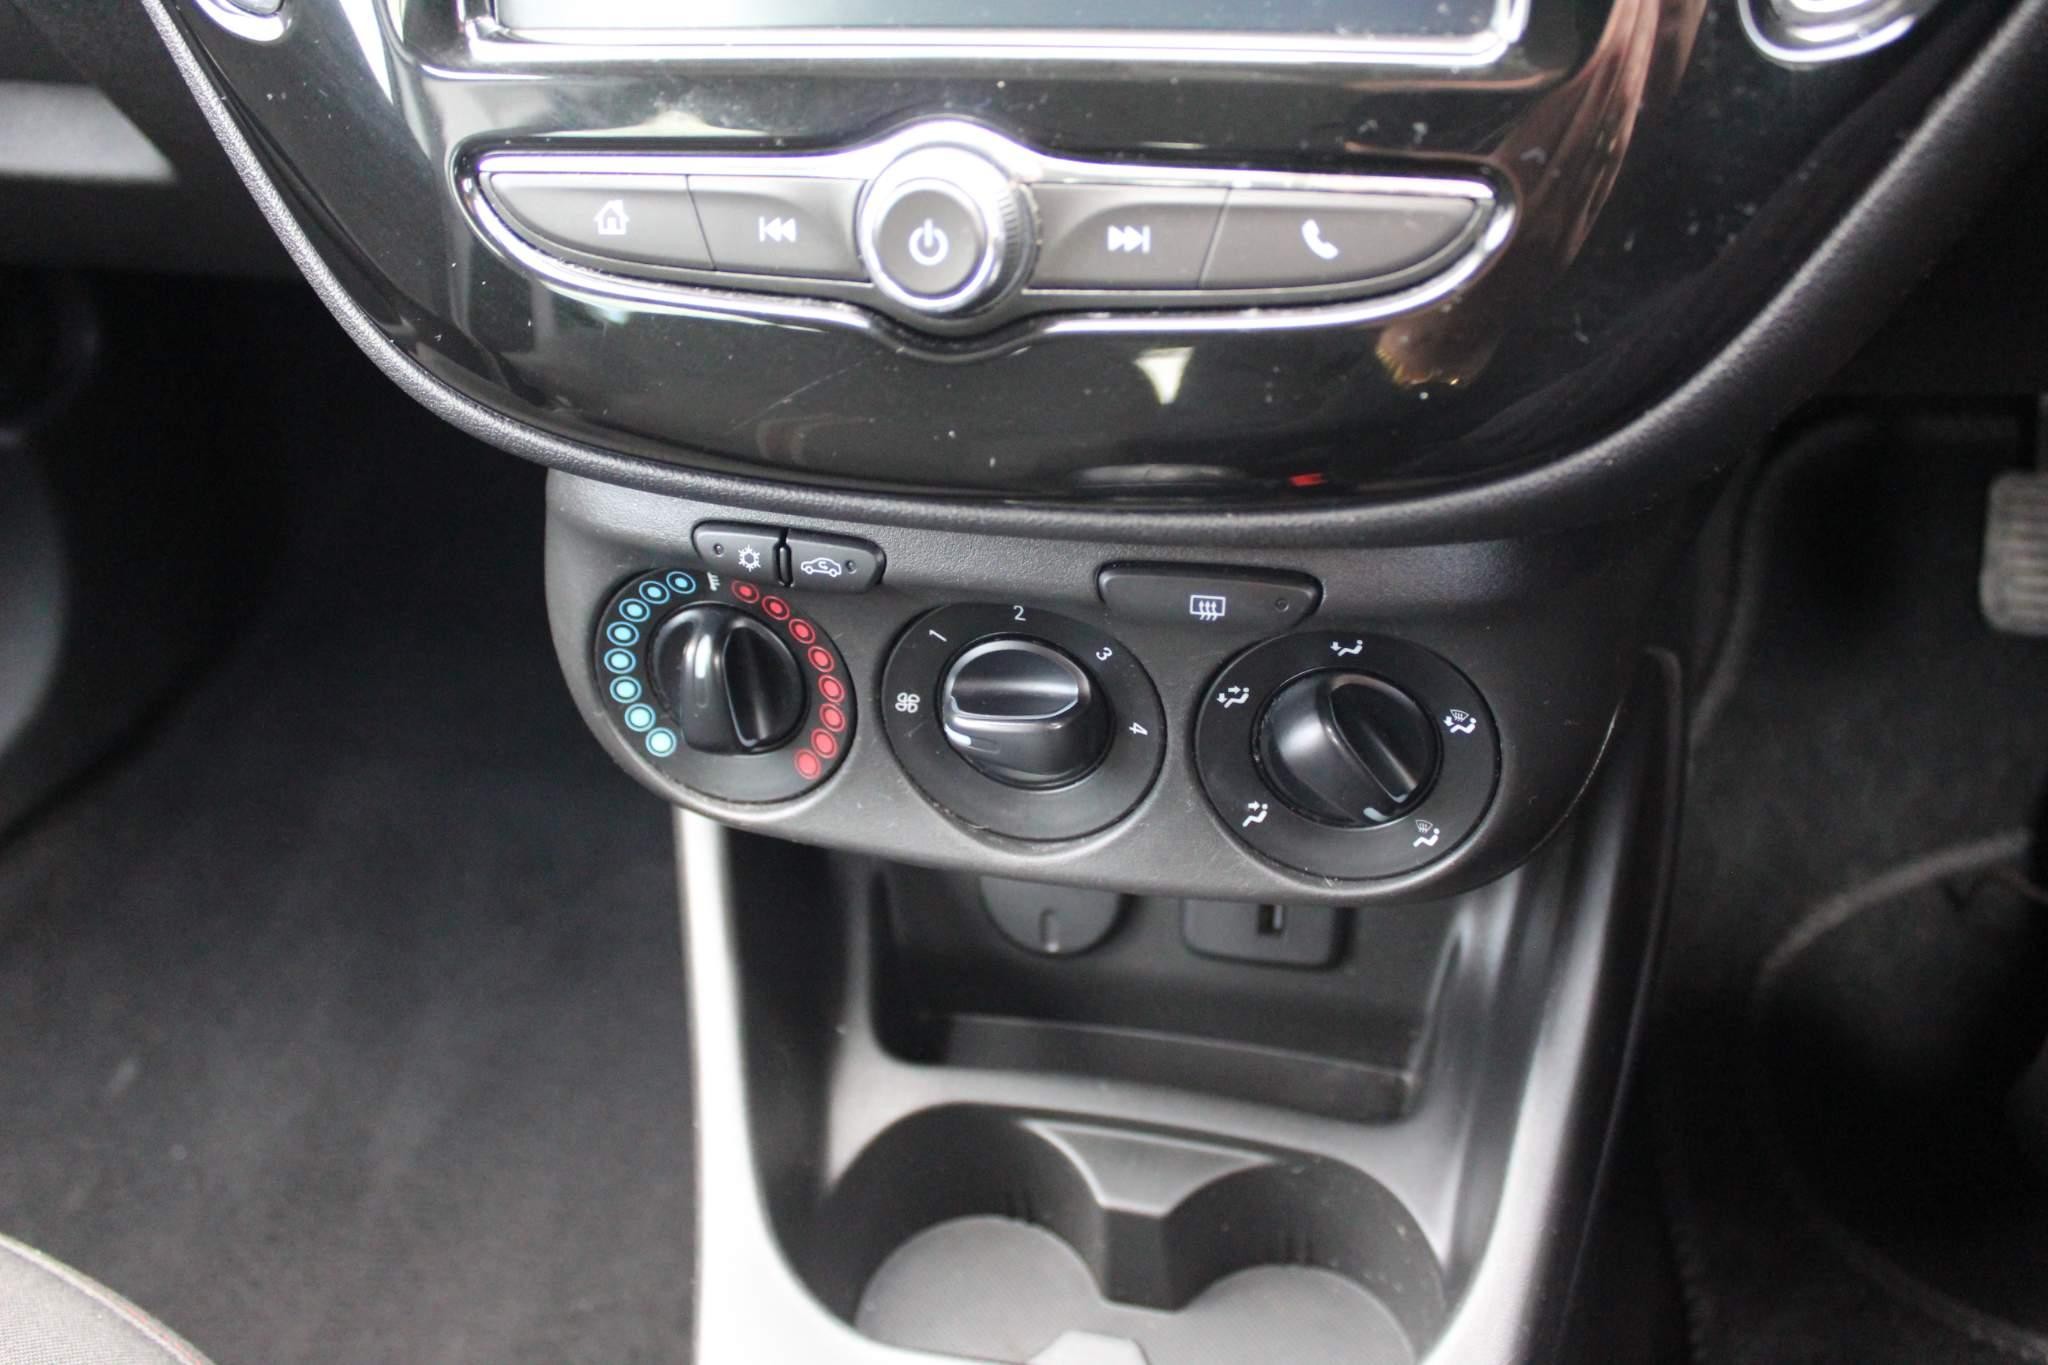 Vauxhall Corsa 1.4 SRi Vx-line Nav Black 5dr (DT19DLO) image 17